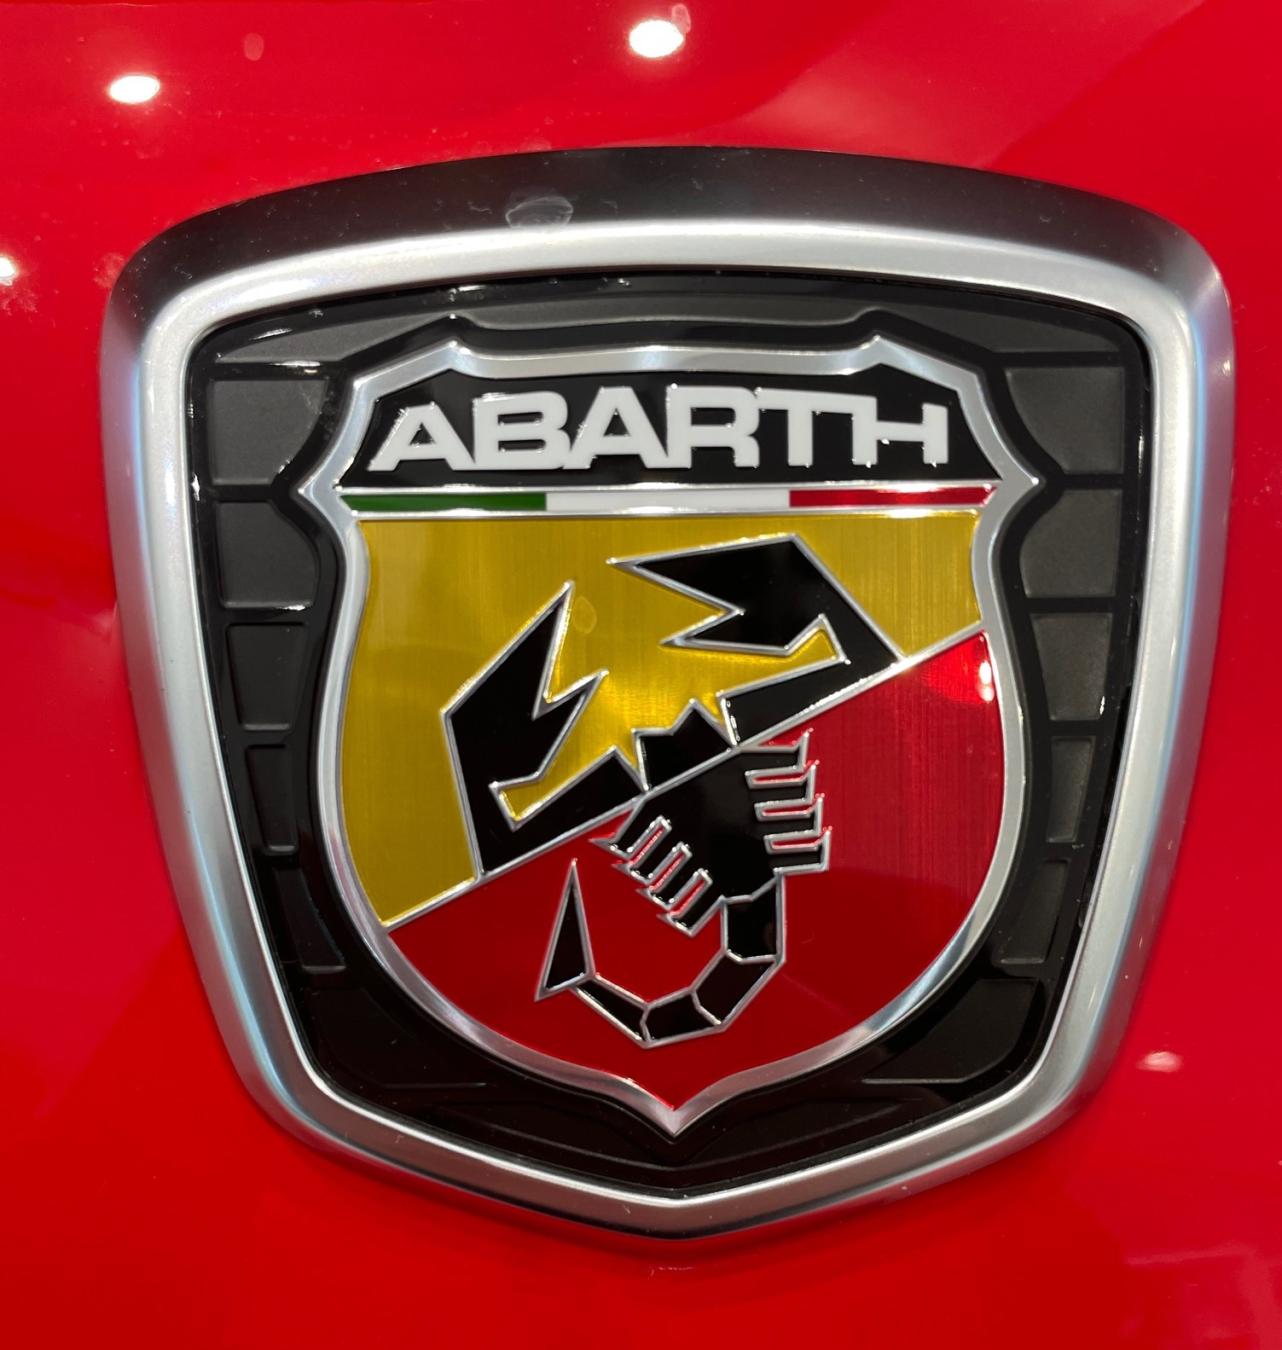 Abarthのエンブレム フィアット アバルト長野スタッフブログ Fiat Abarth Official Dealer Site